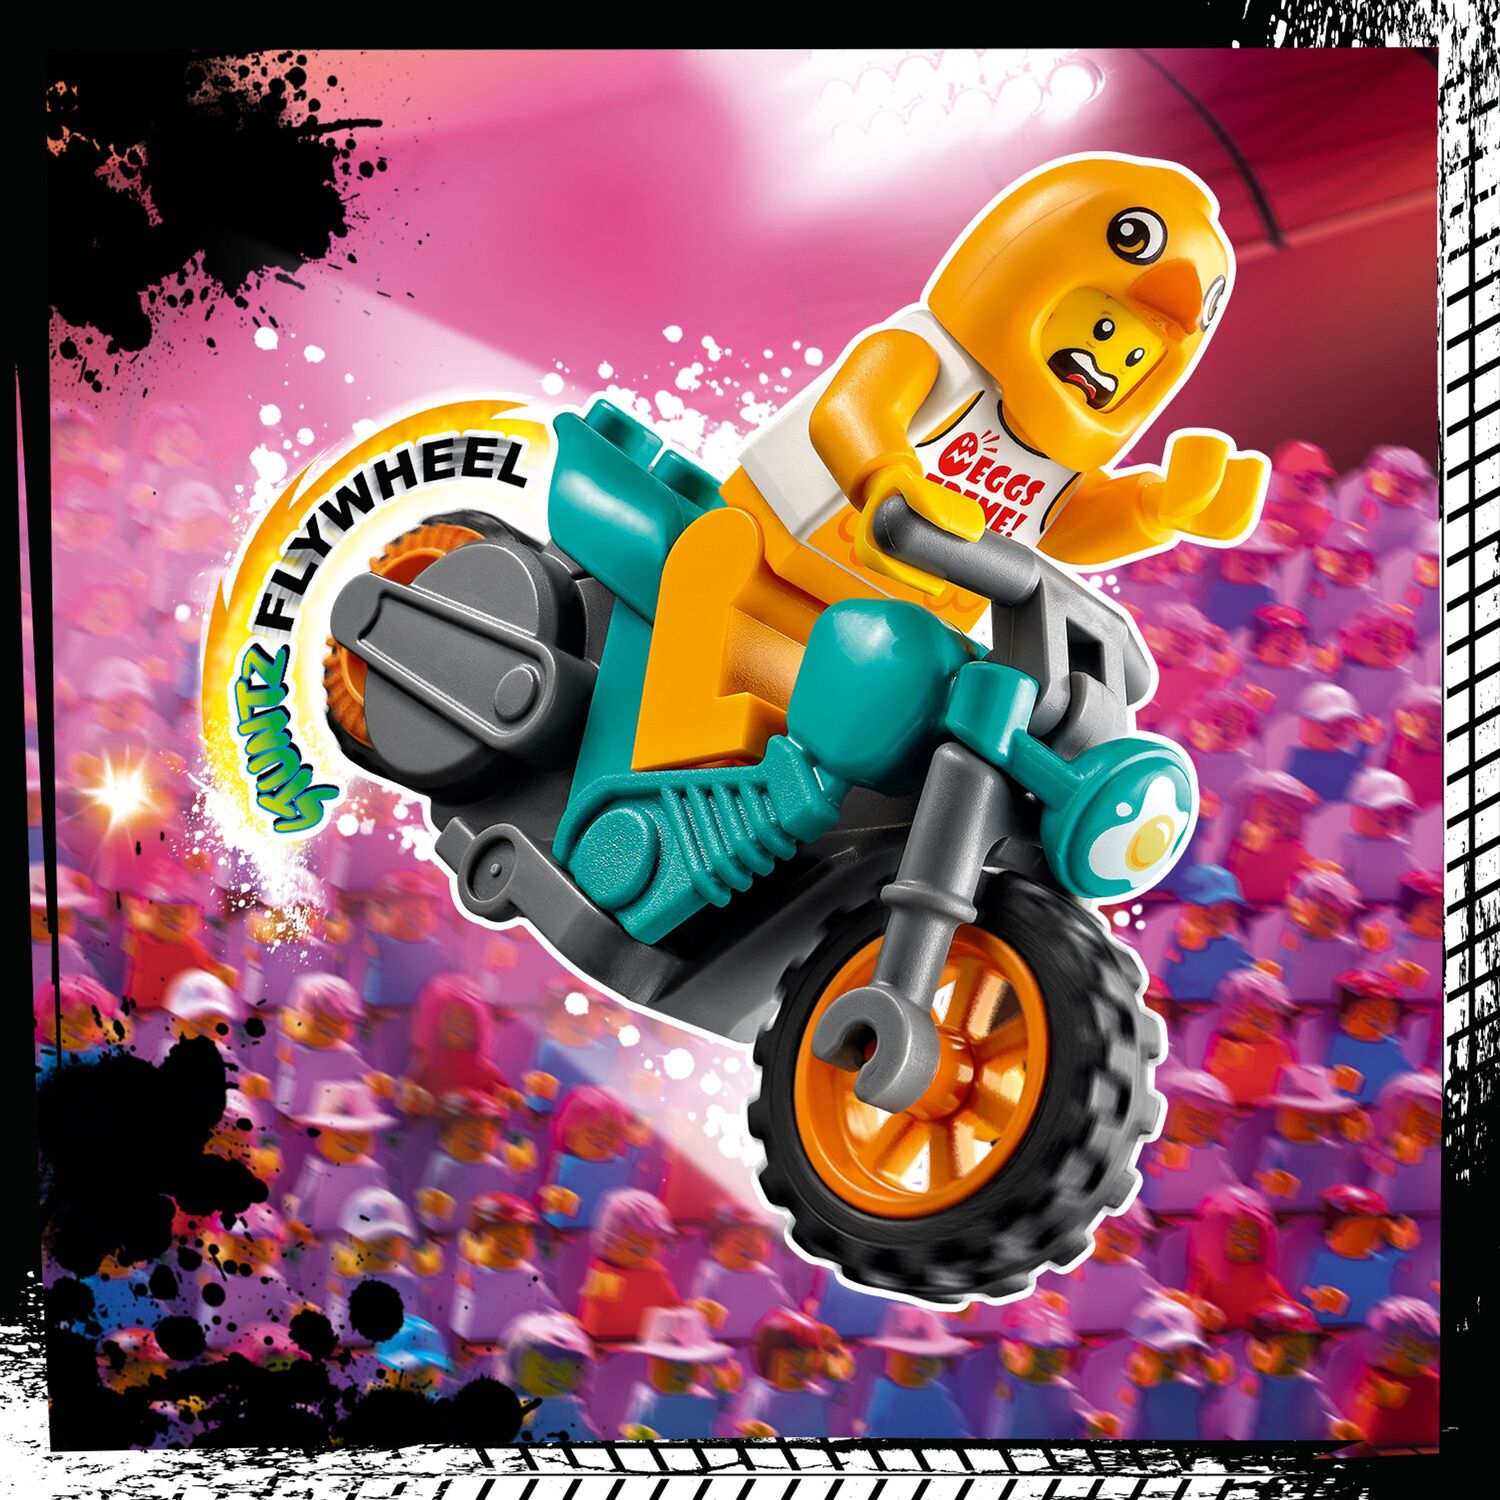 LEGO  City Stuntz Ακροβατική Μηχανή με Κοτόπουλο 60310 - LEGO, LEGO City